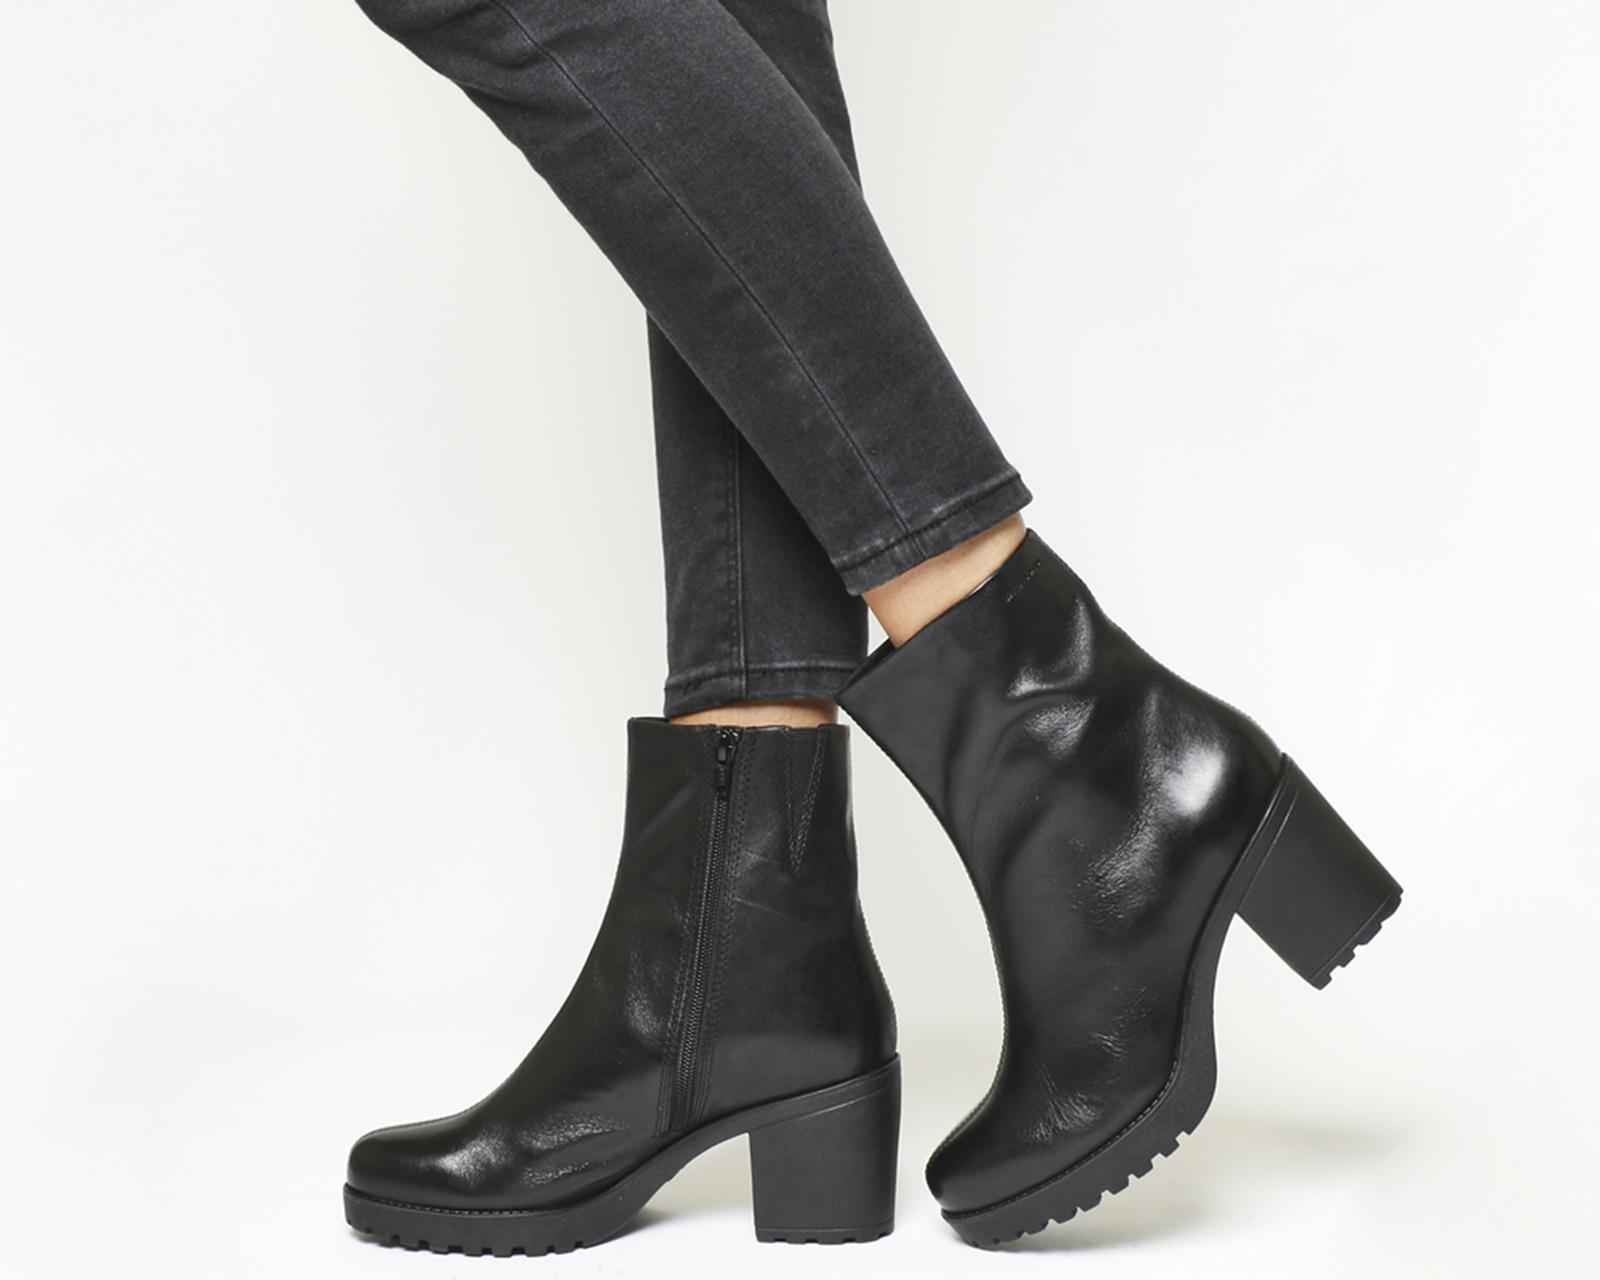 Lyst - Vagabond Grace High Cut Boots in Black